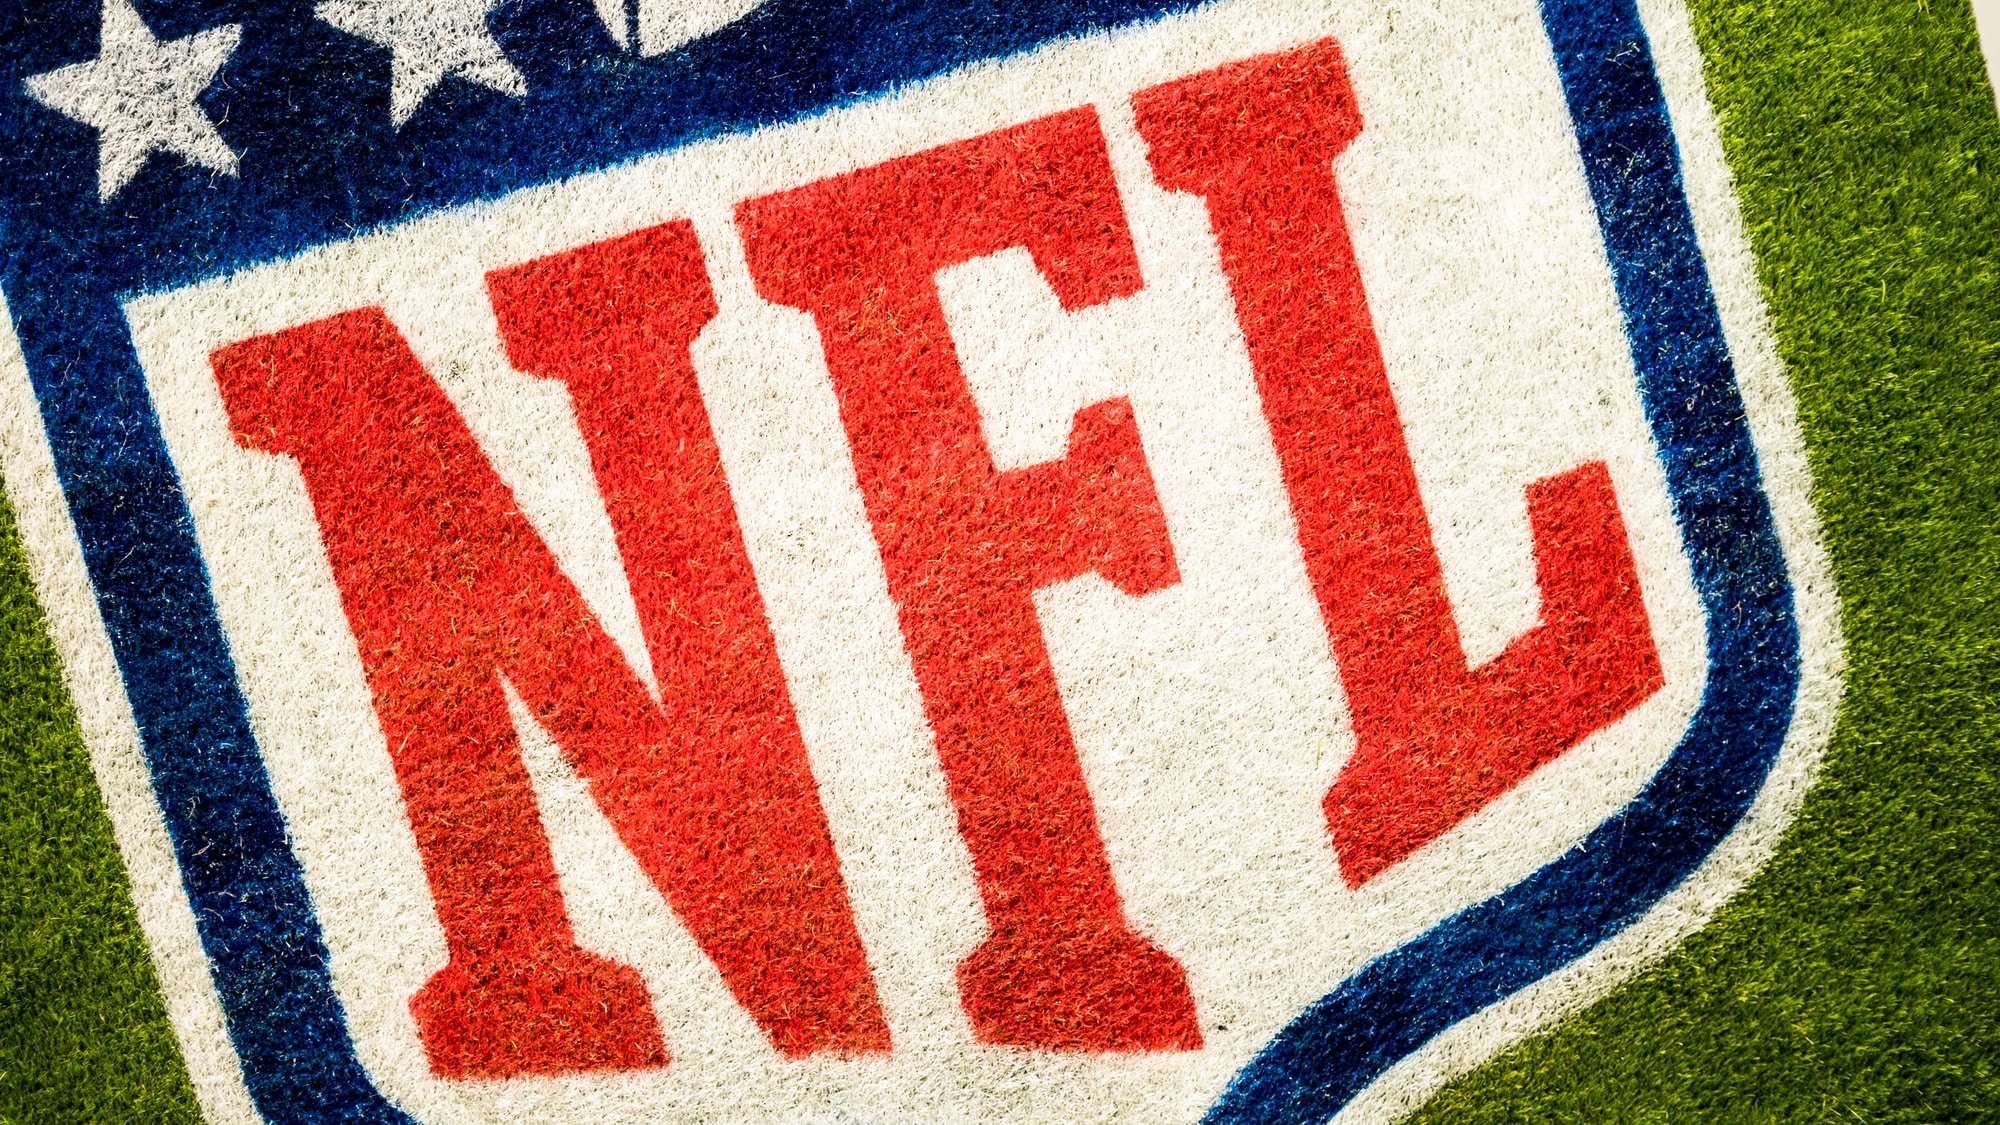 Super Bowl MVP Odds Favor Rodgers as NFL Playoffs Begin